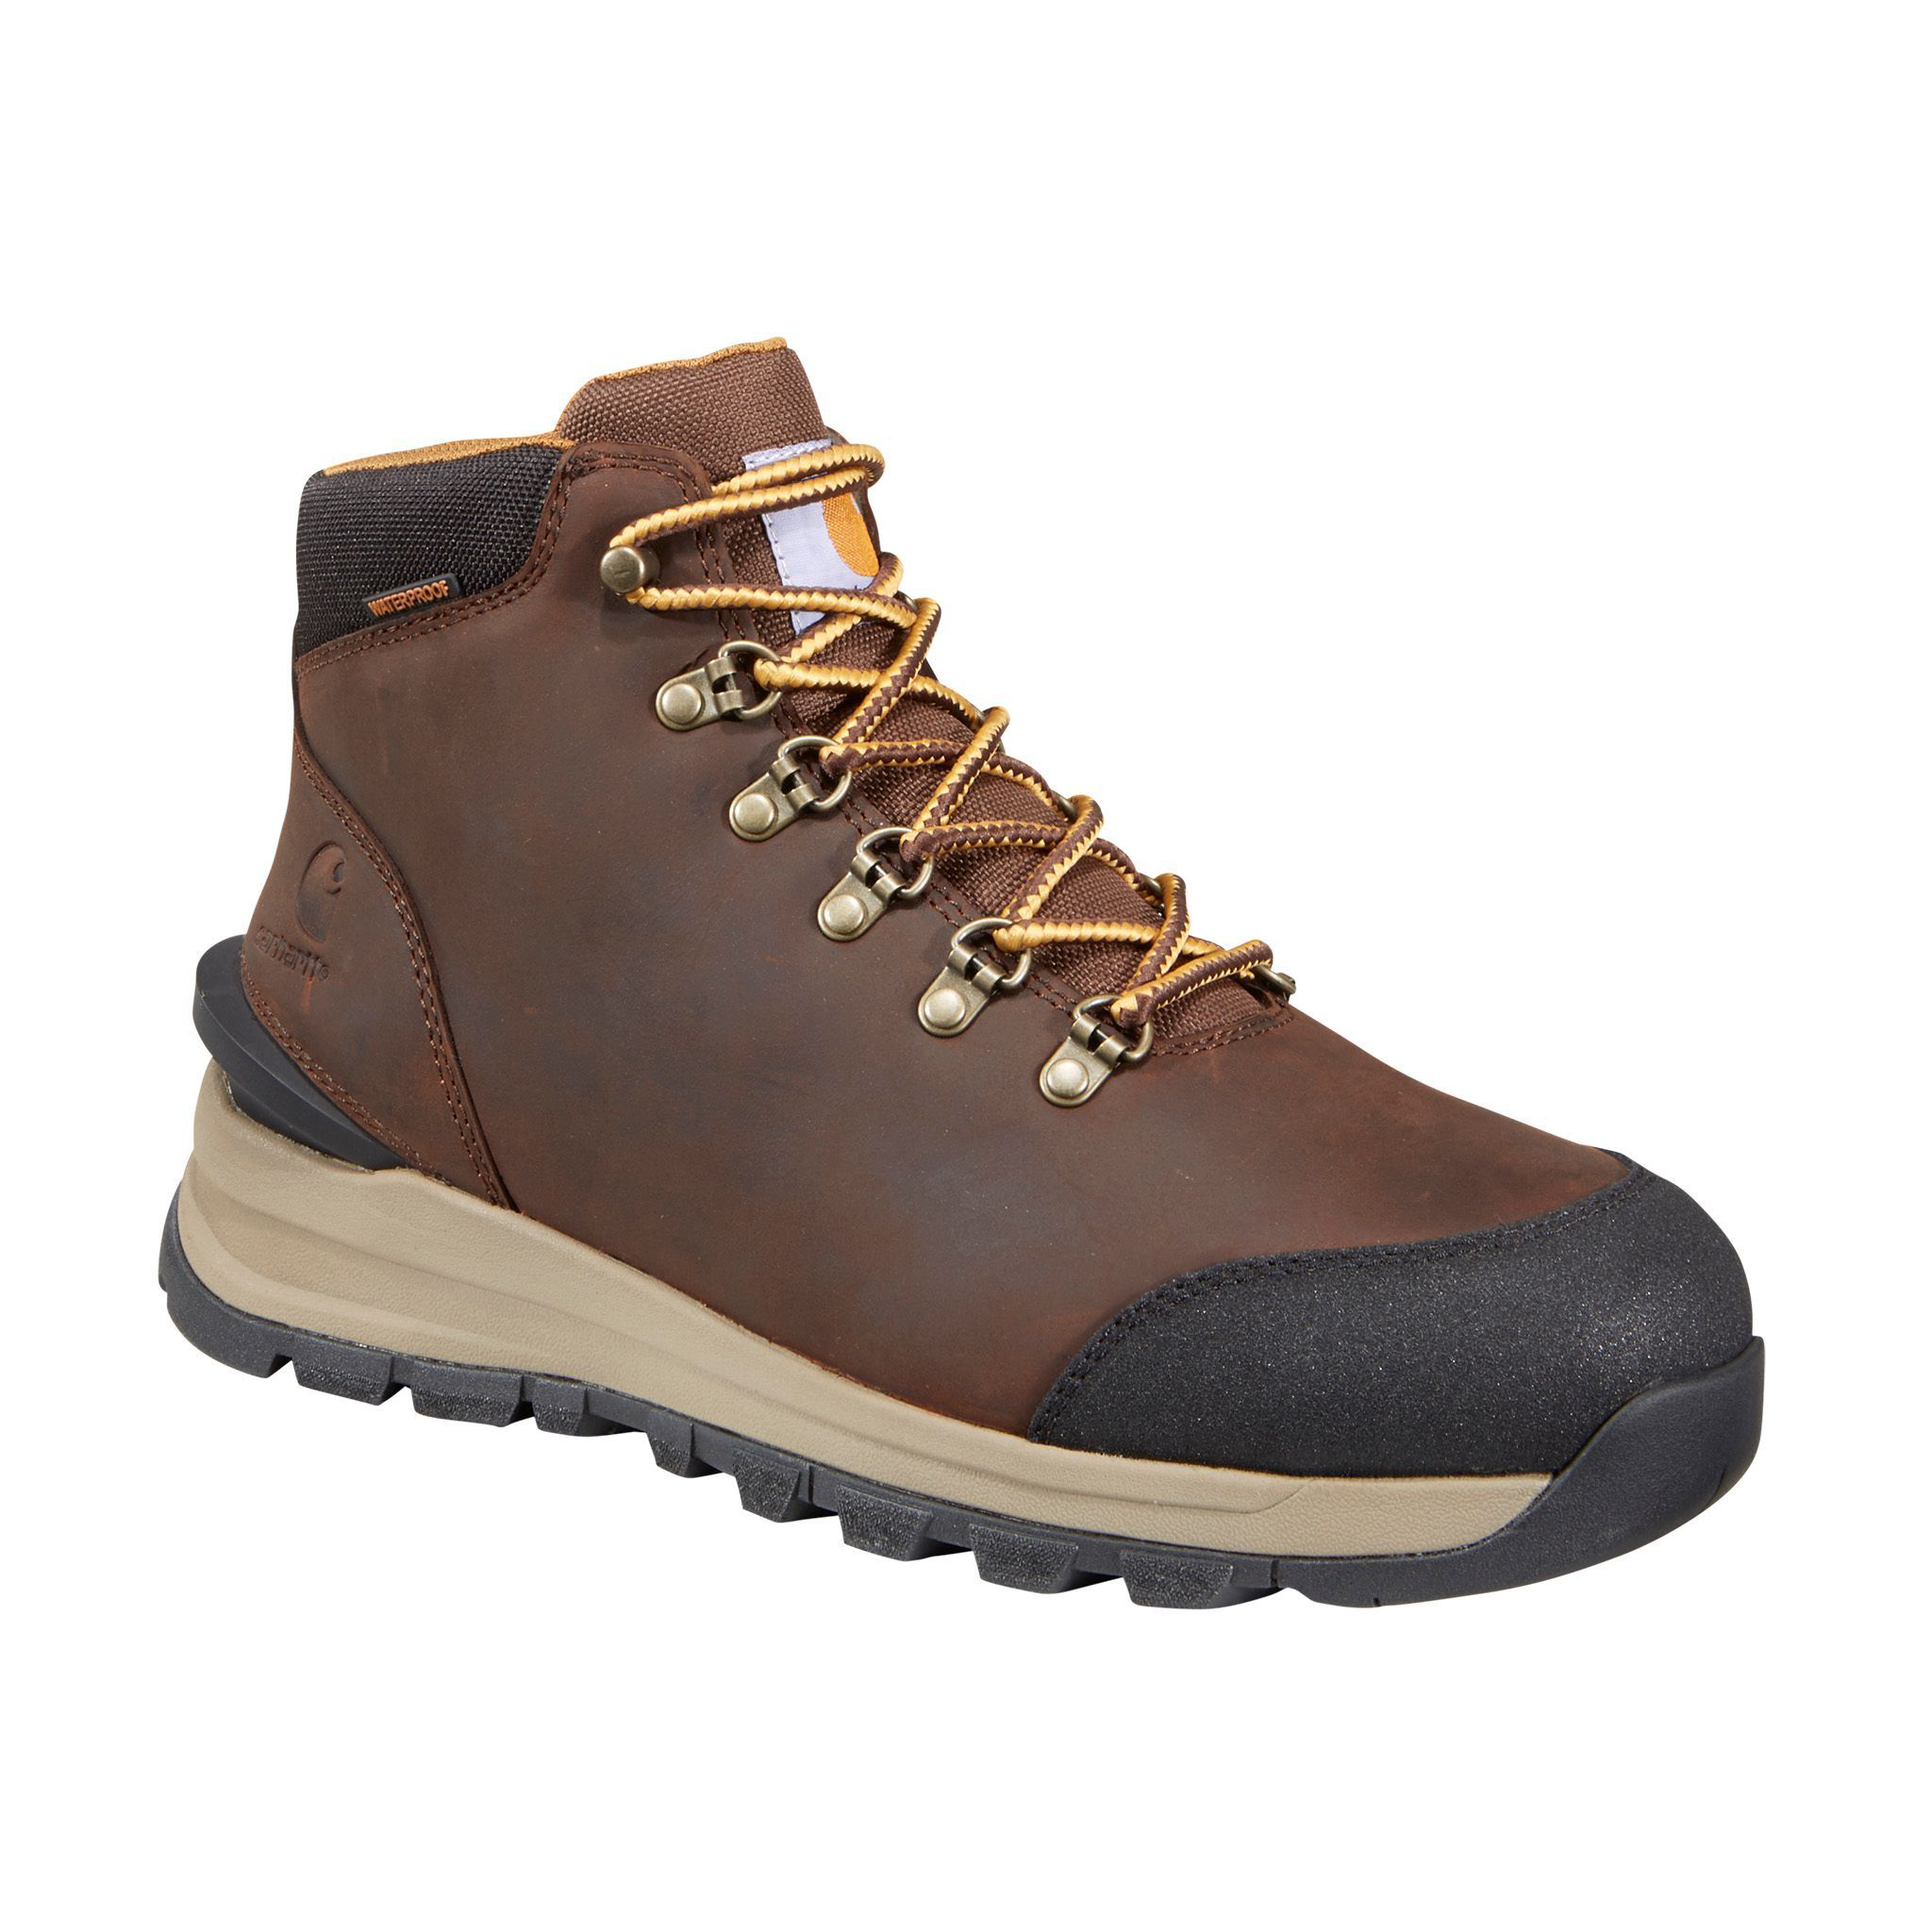 Carhartt Gilmore Waterproof Hiking Boots for Men - Dark Brown Oil Tanned - 11W